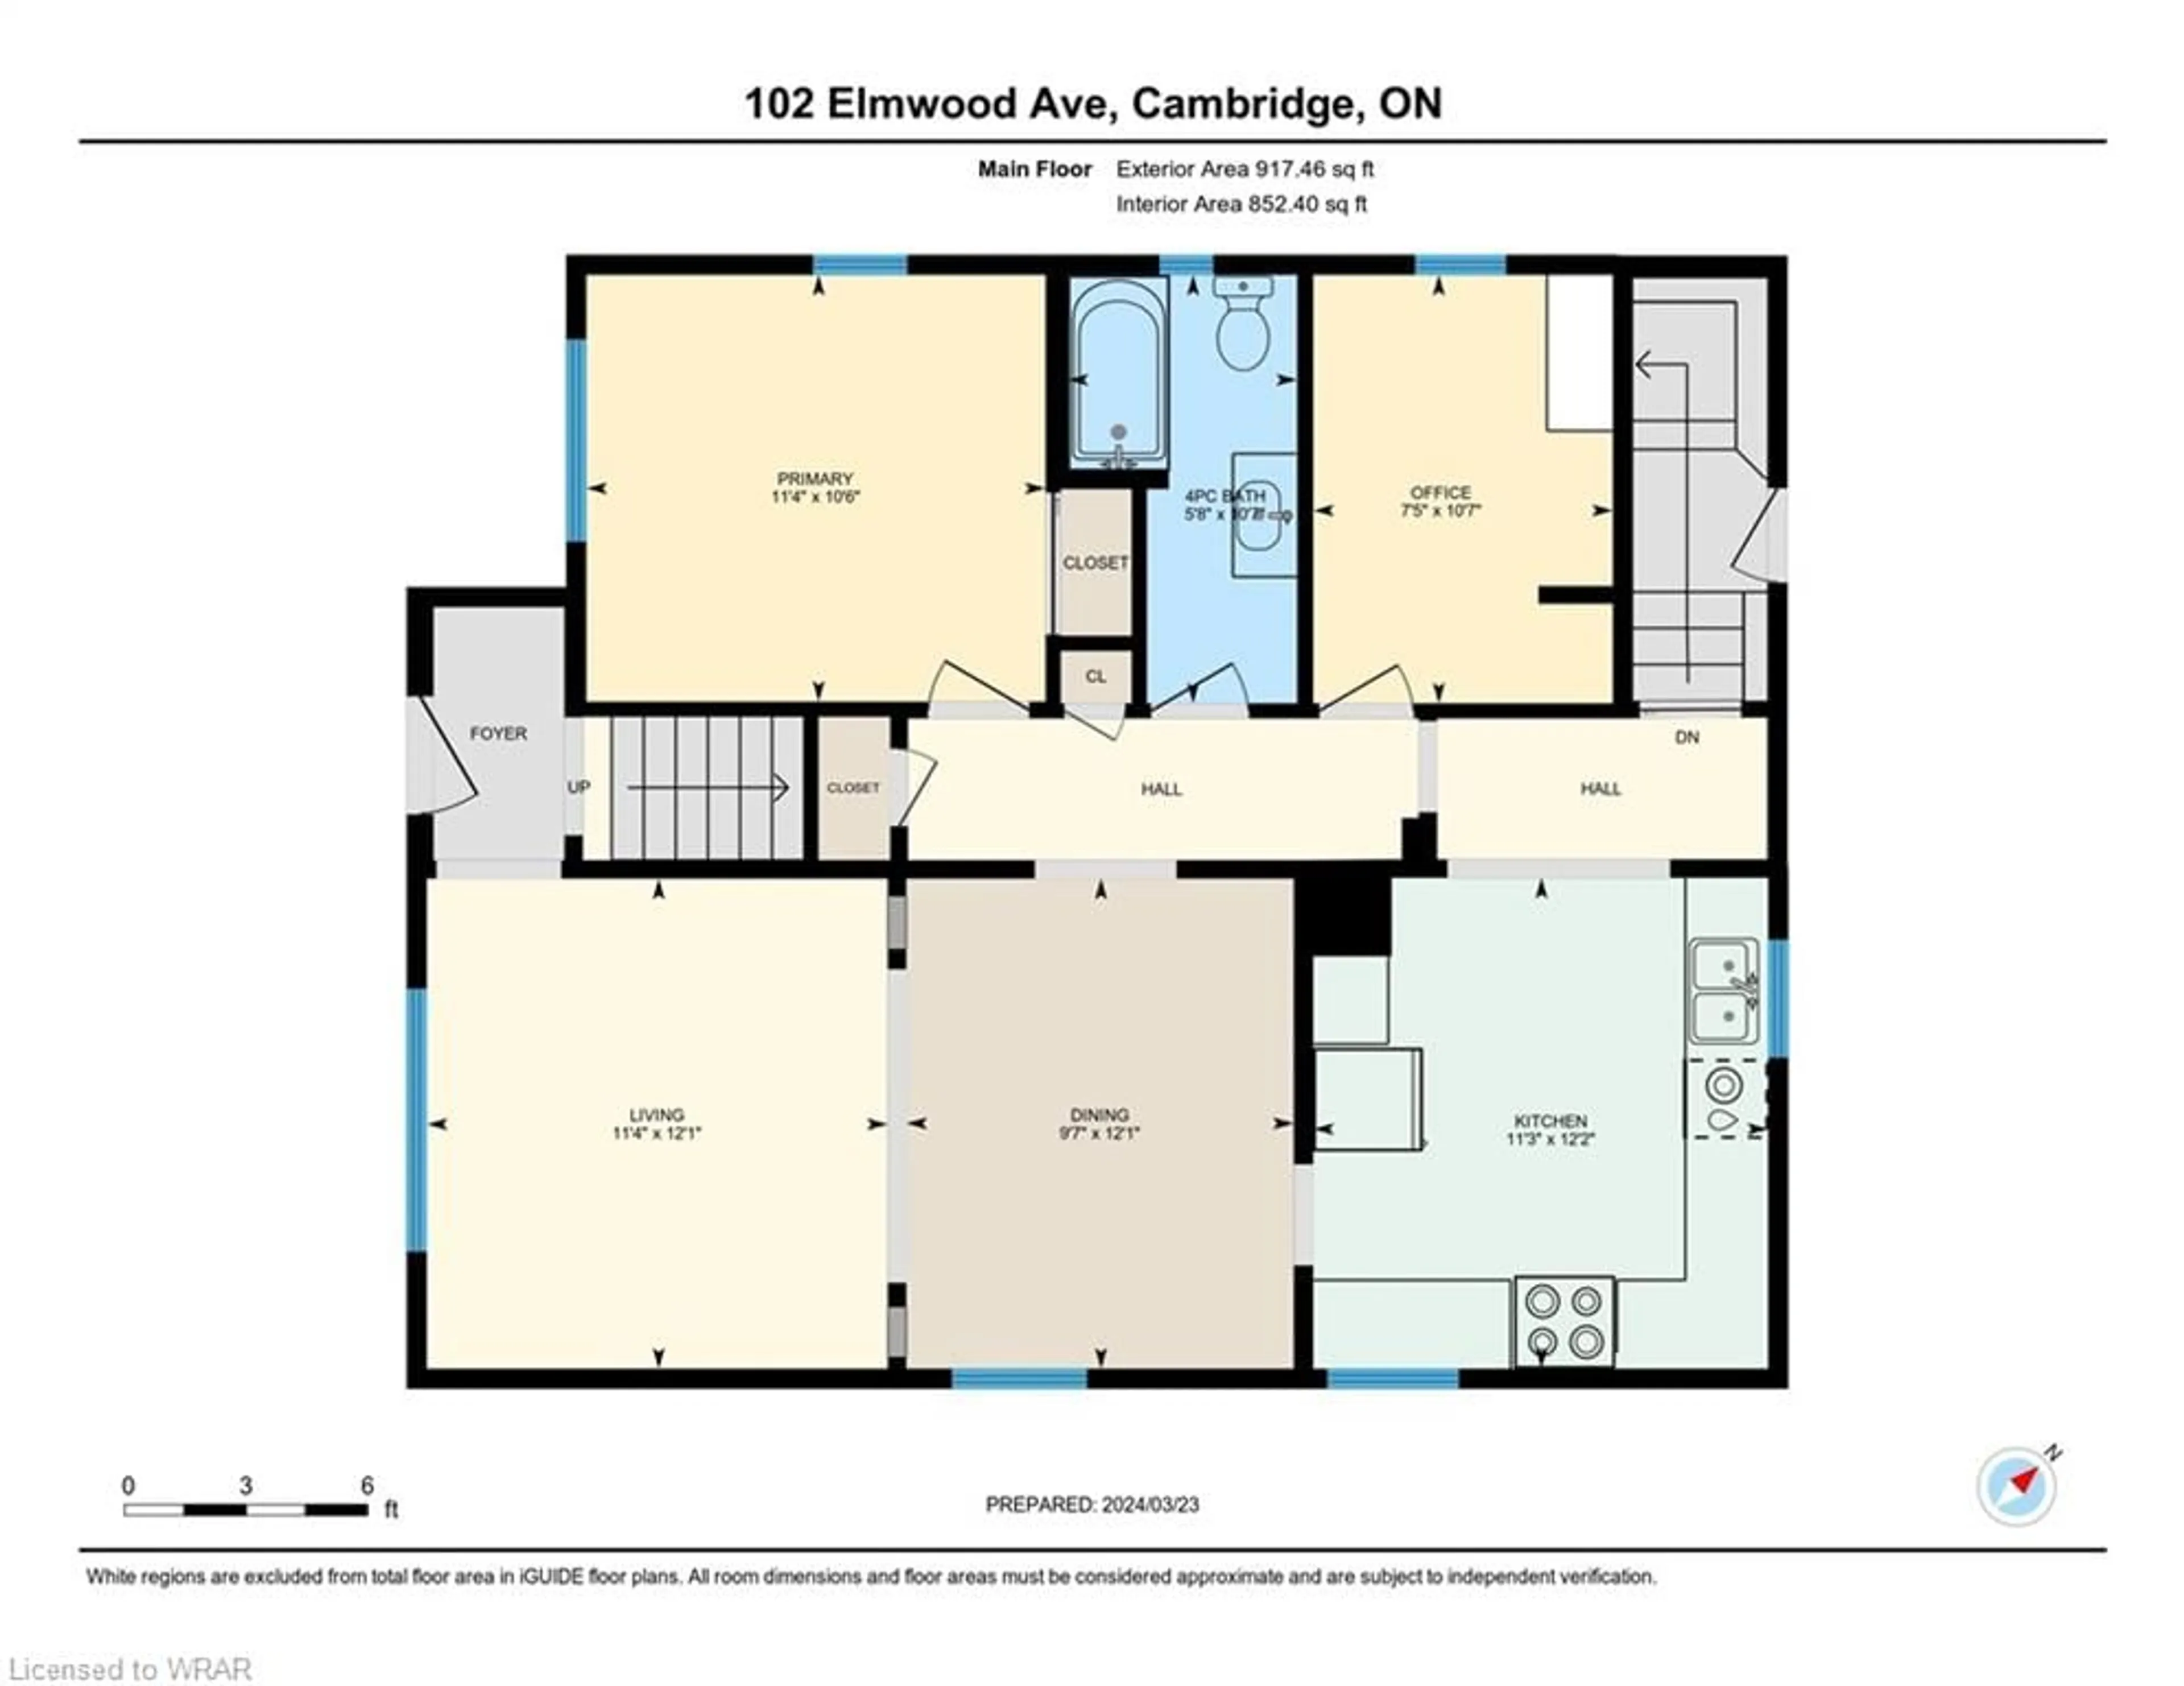 Floor plan for 102 Elmwood Ave, Cambridge Ontario N1R 4Y6